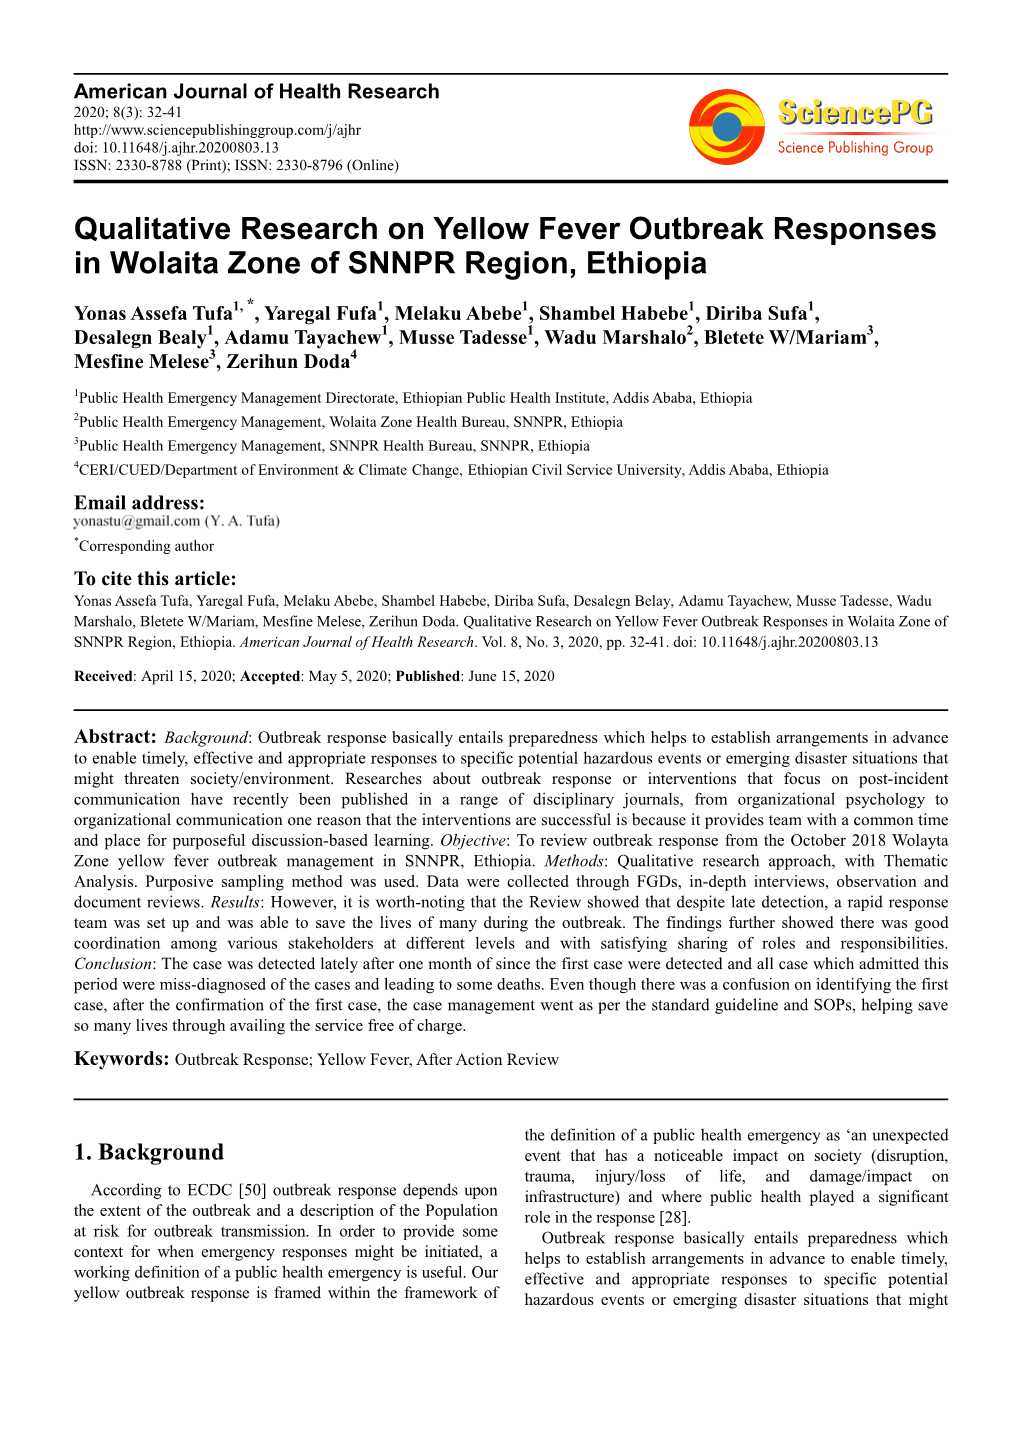 Qualitative Research on Yellow Fever Outbreak Responses in Wolaita Zone of SNNPR Region, Ethiopia